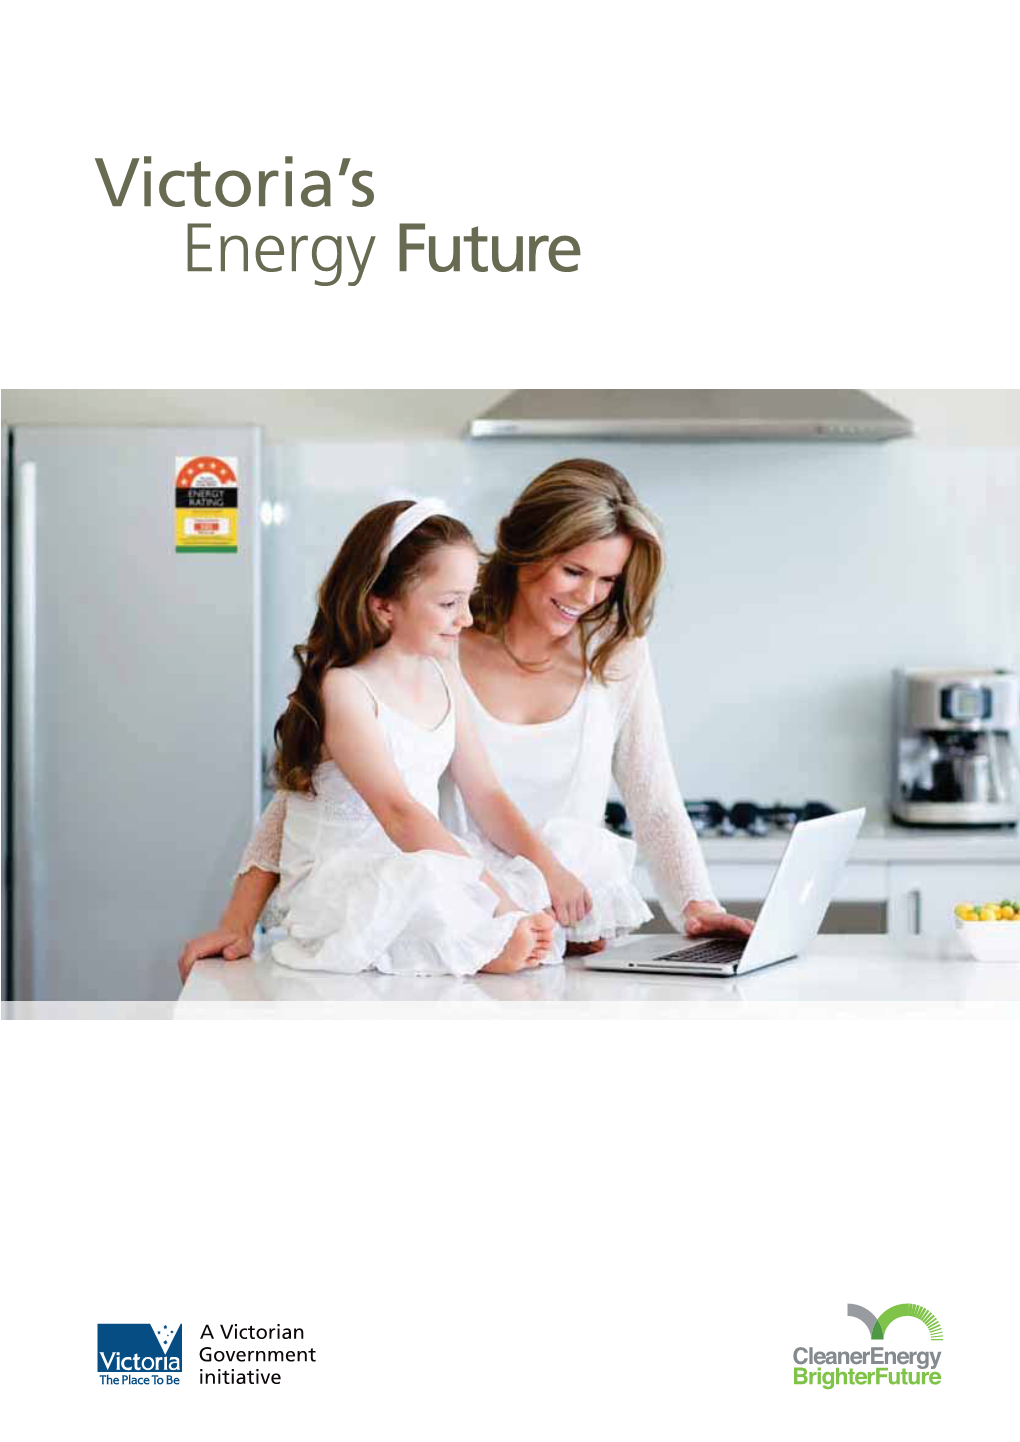 Victoria's Energy Future